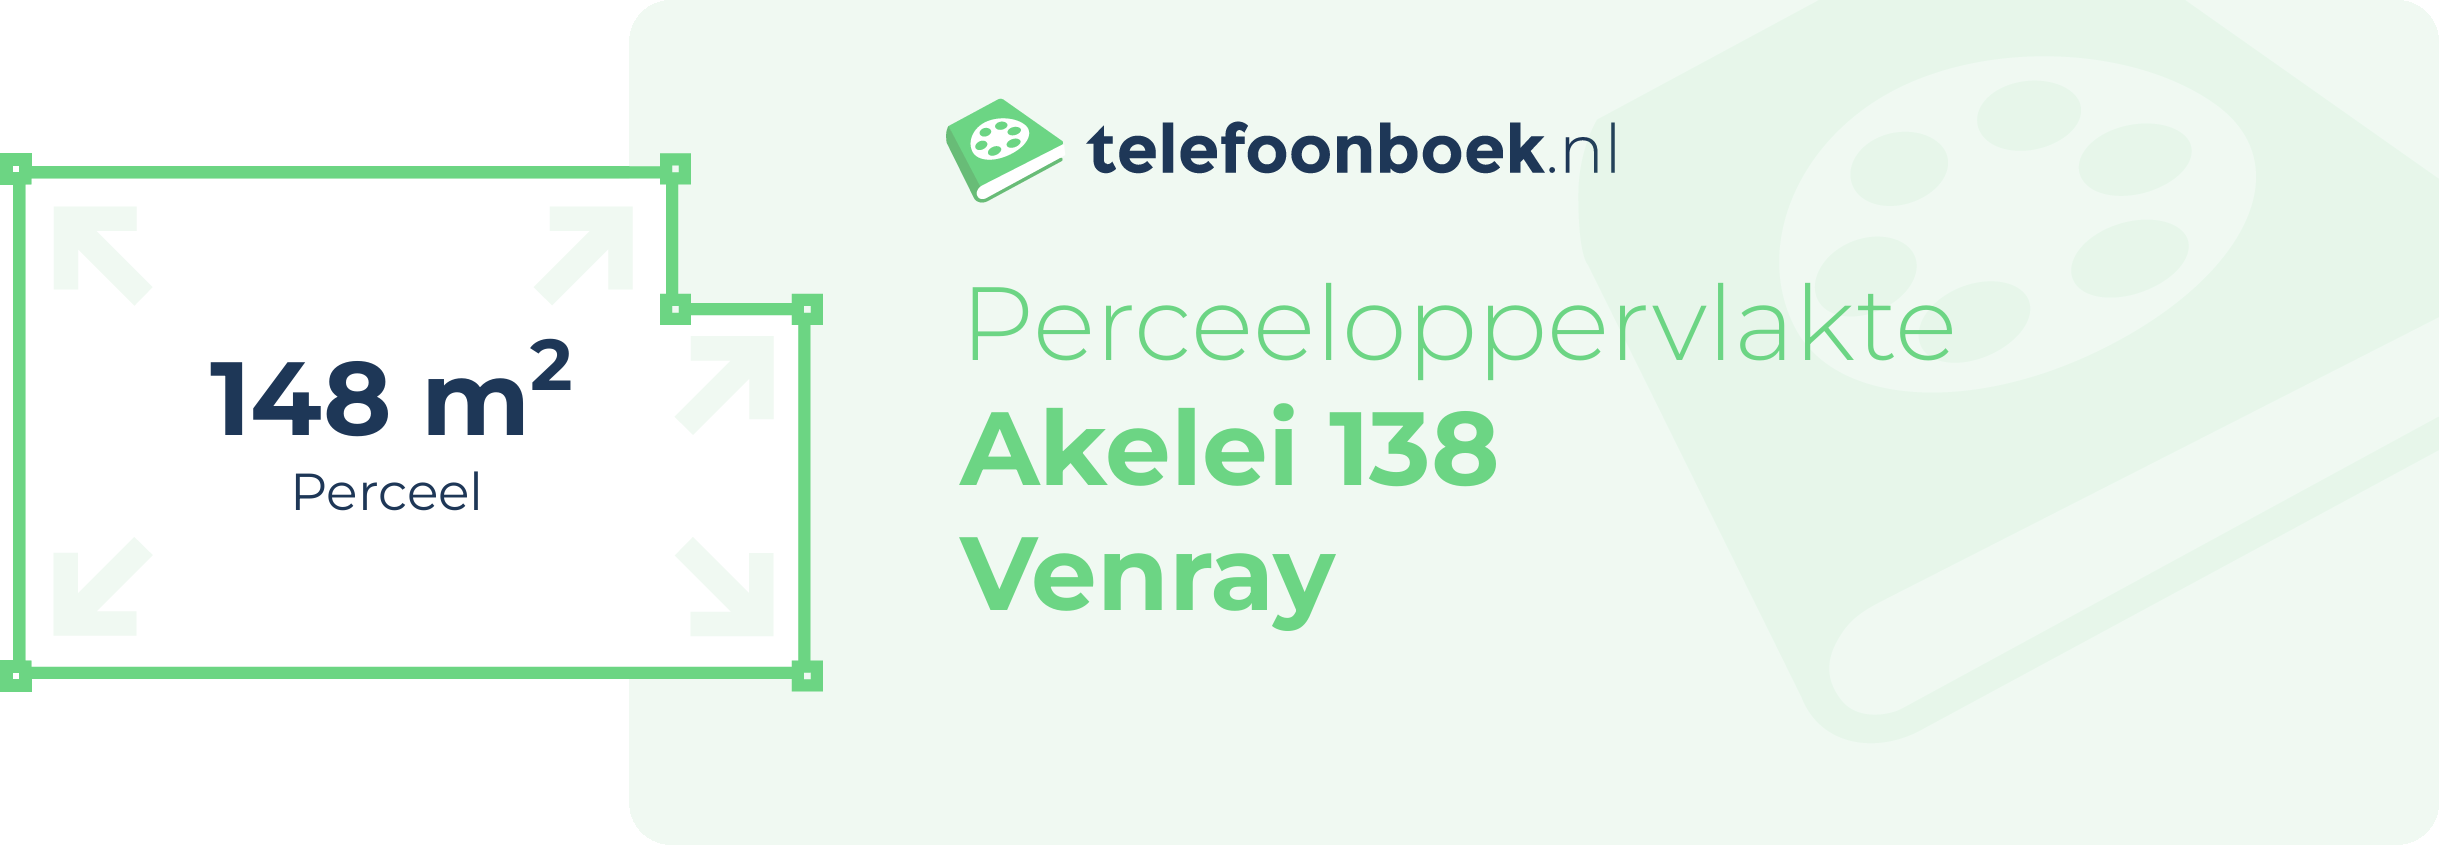 Perceeloppervlakte Akelei 138 Venray